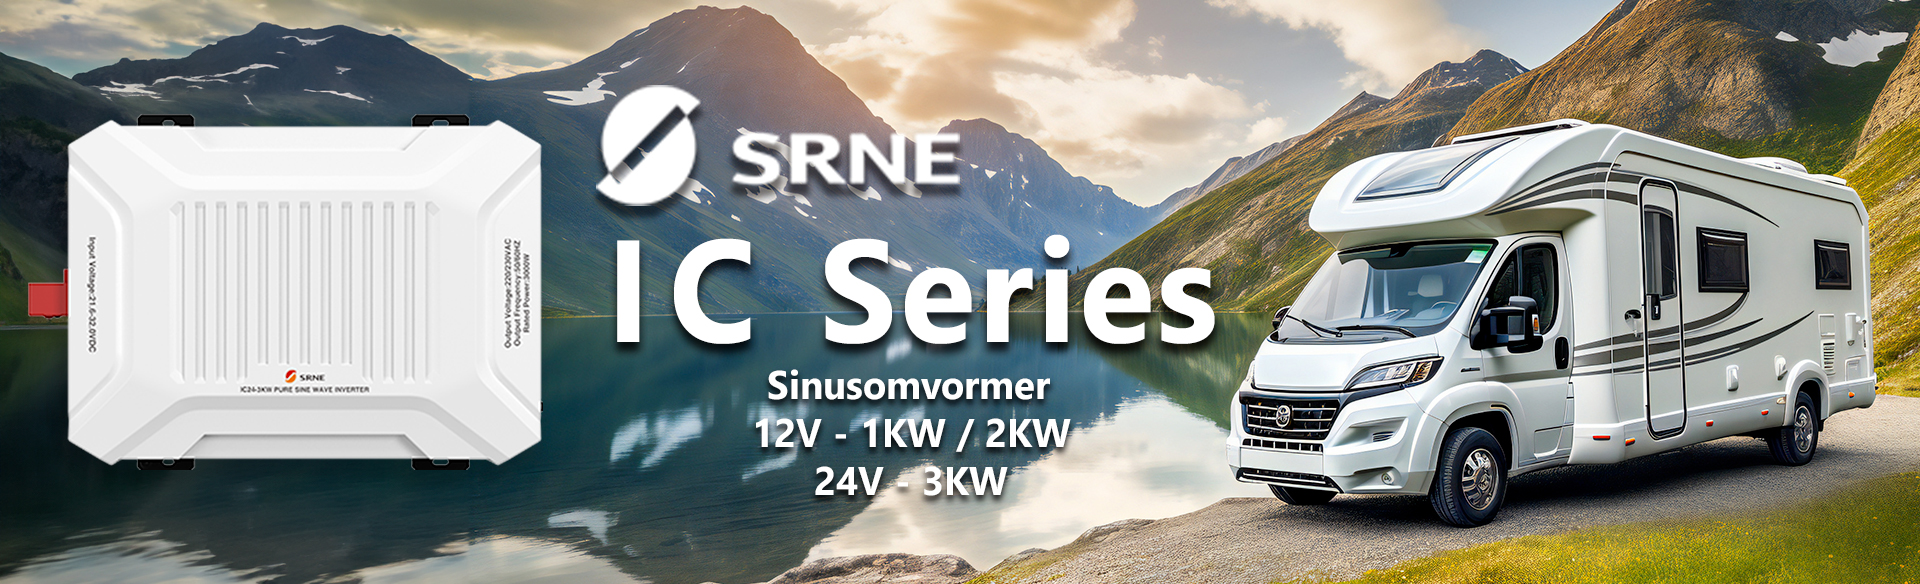 SRNE IC Series